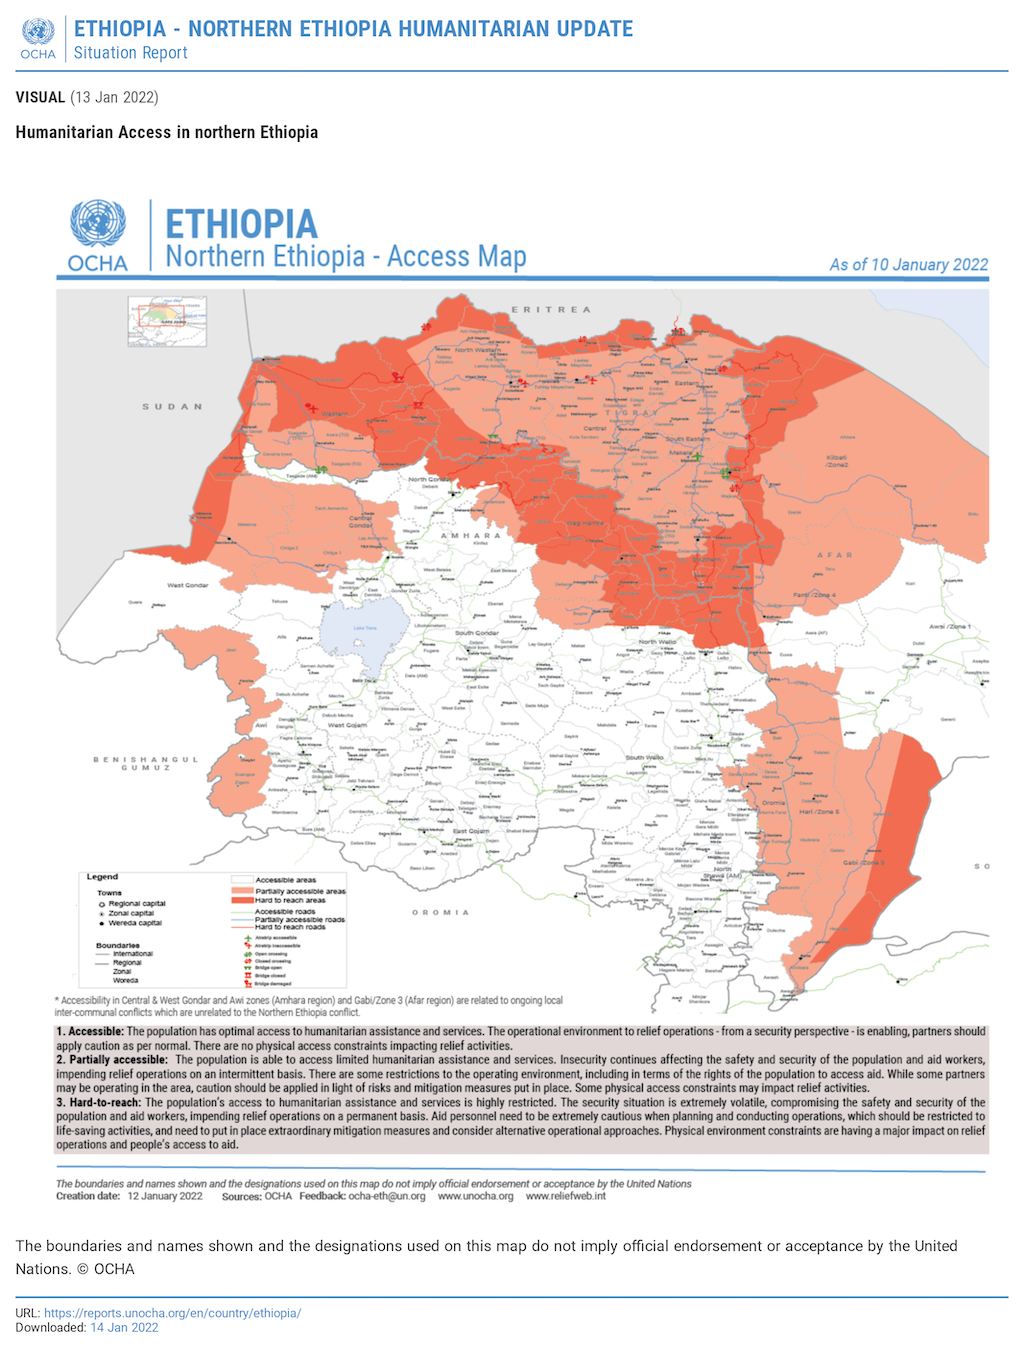 Situation Report - Ethiopia - Northern Ethiopia Humanitarian Update - 14 Jan 2022